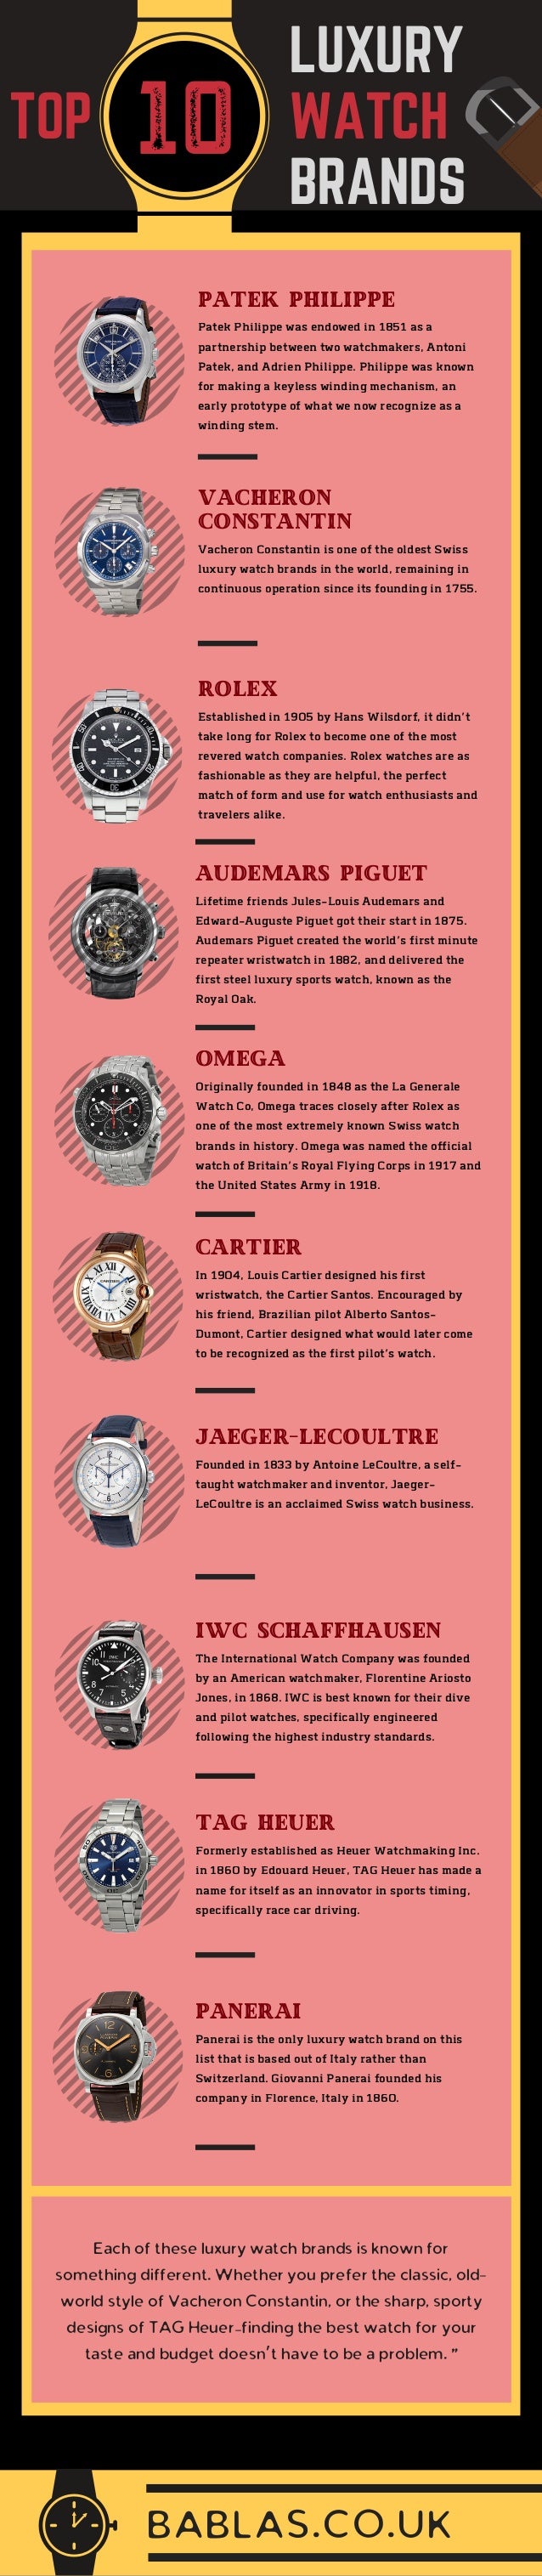 international watch company rolex